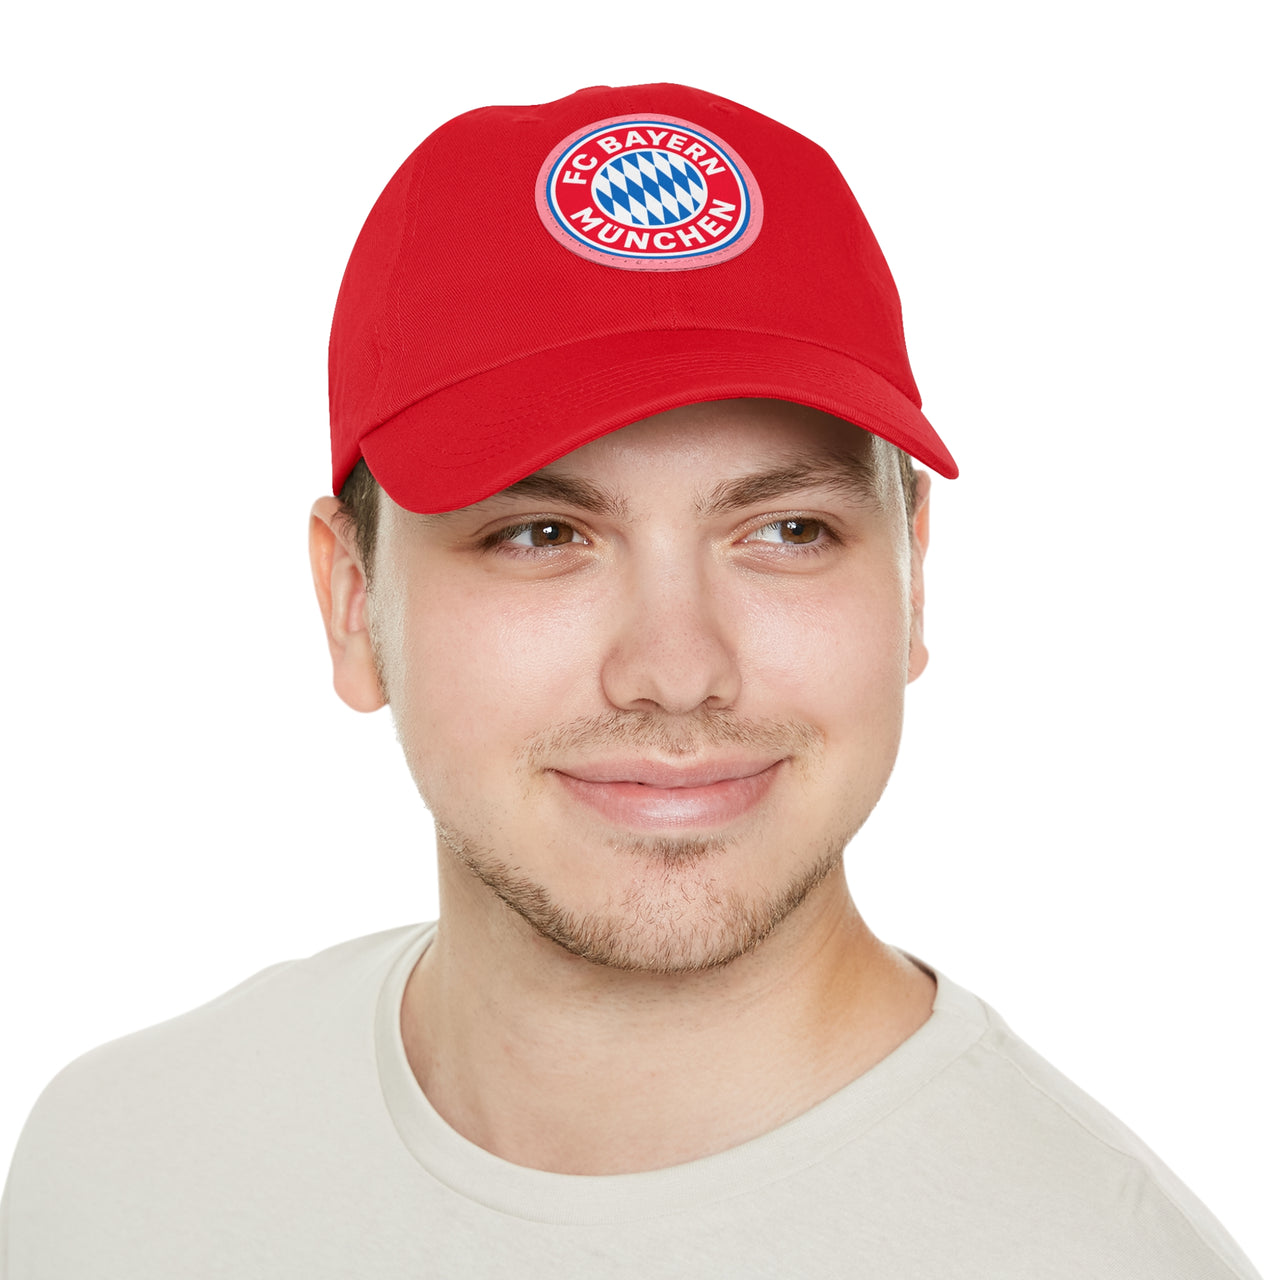 Bayern Munich Dad Hat with Leather Patch (Round)